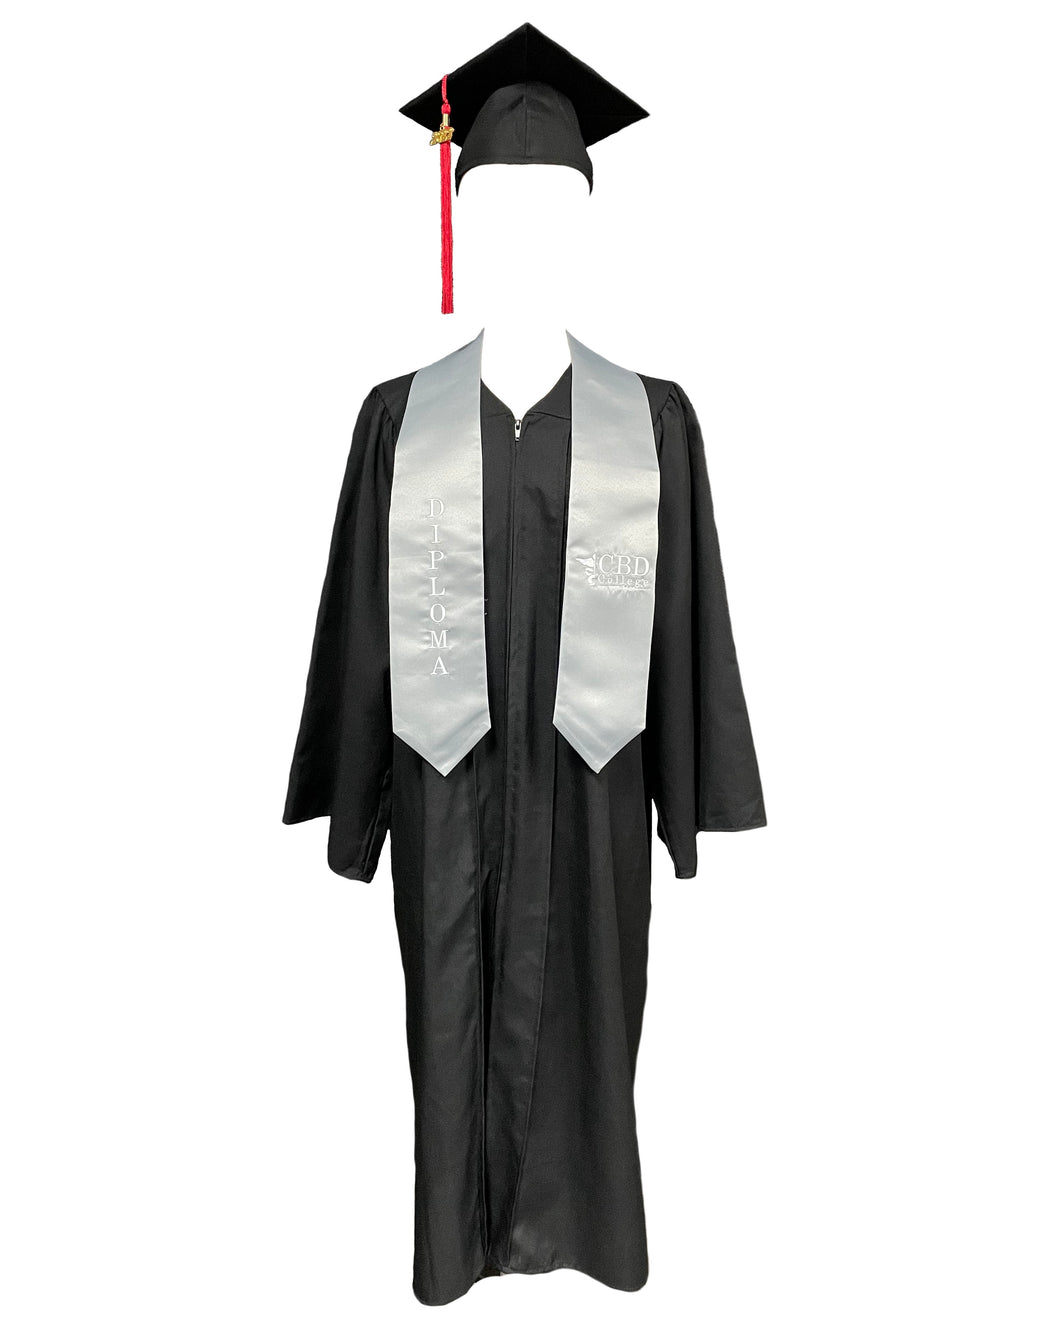 Diploma Cap & Gown Unit